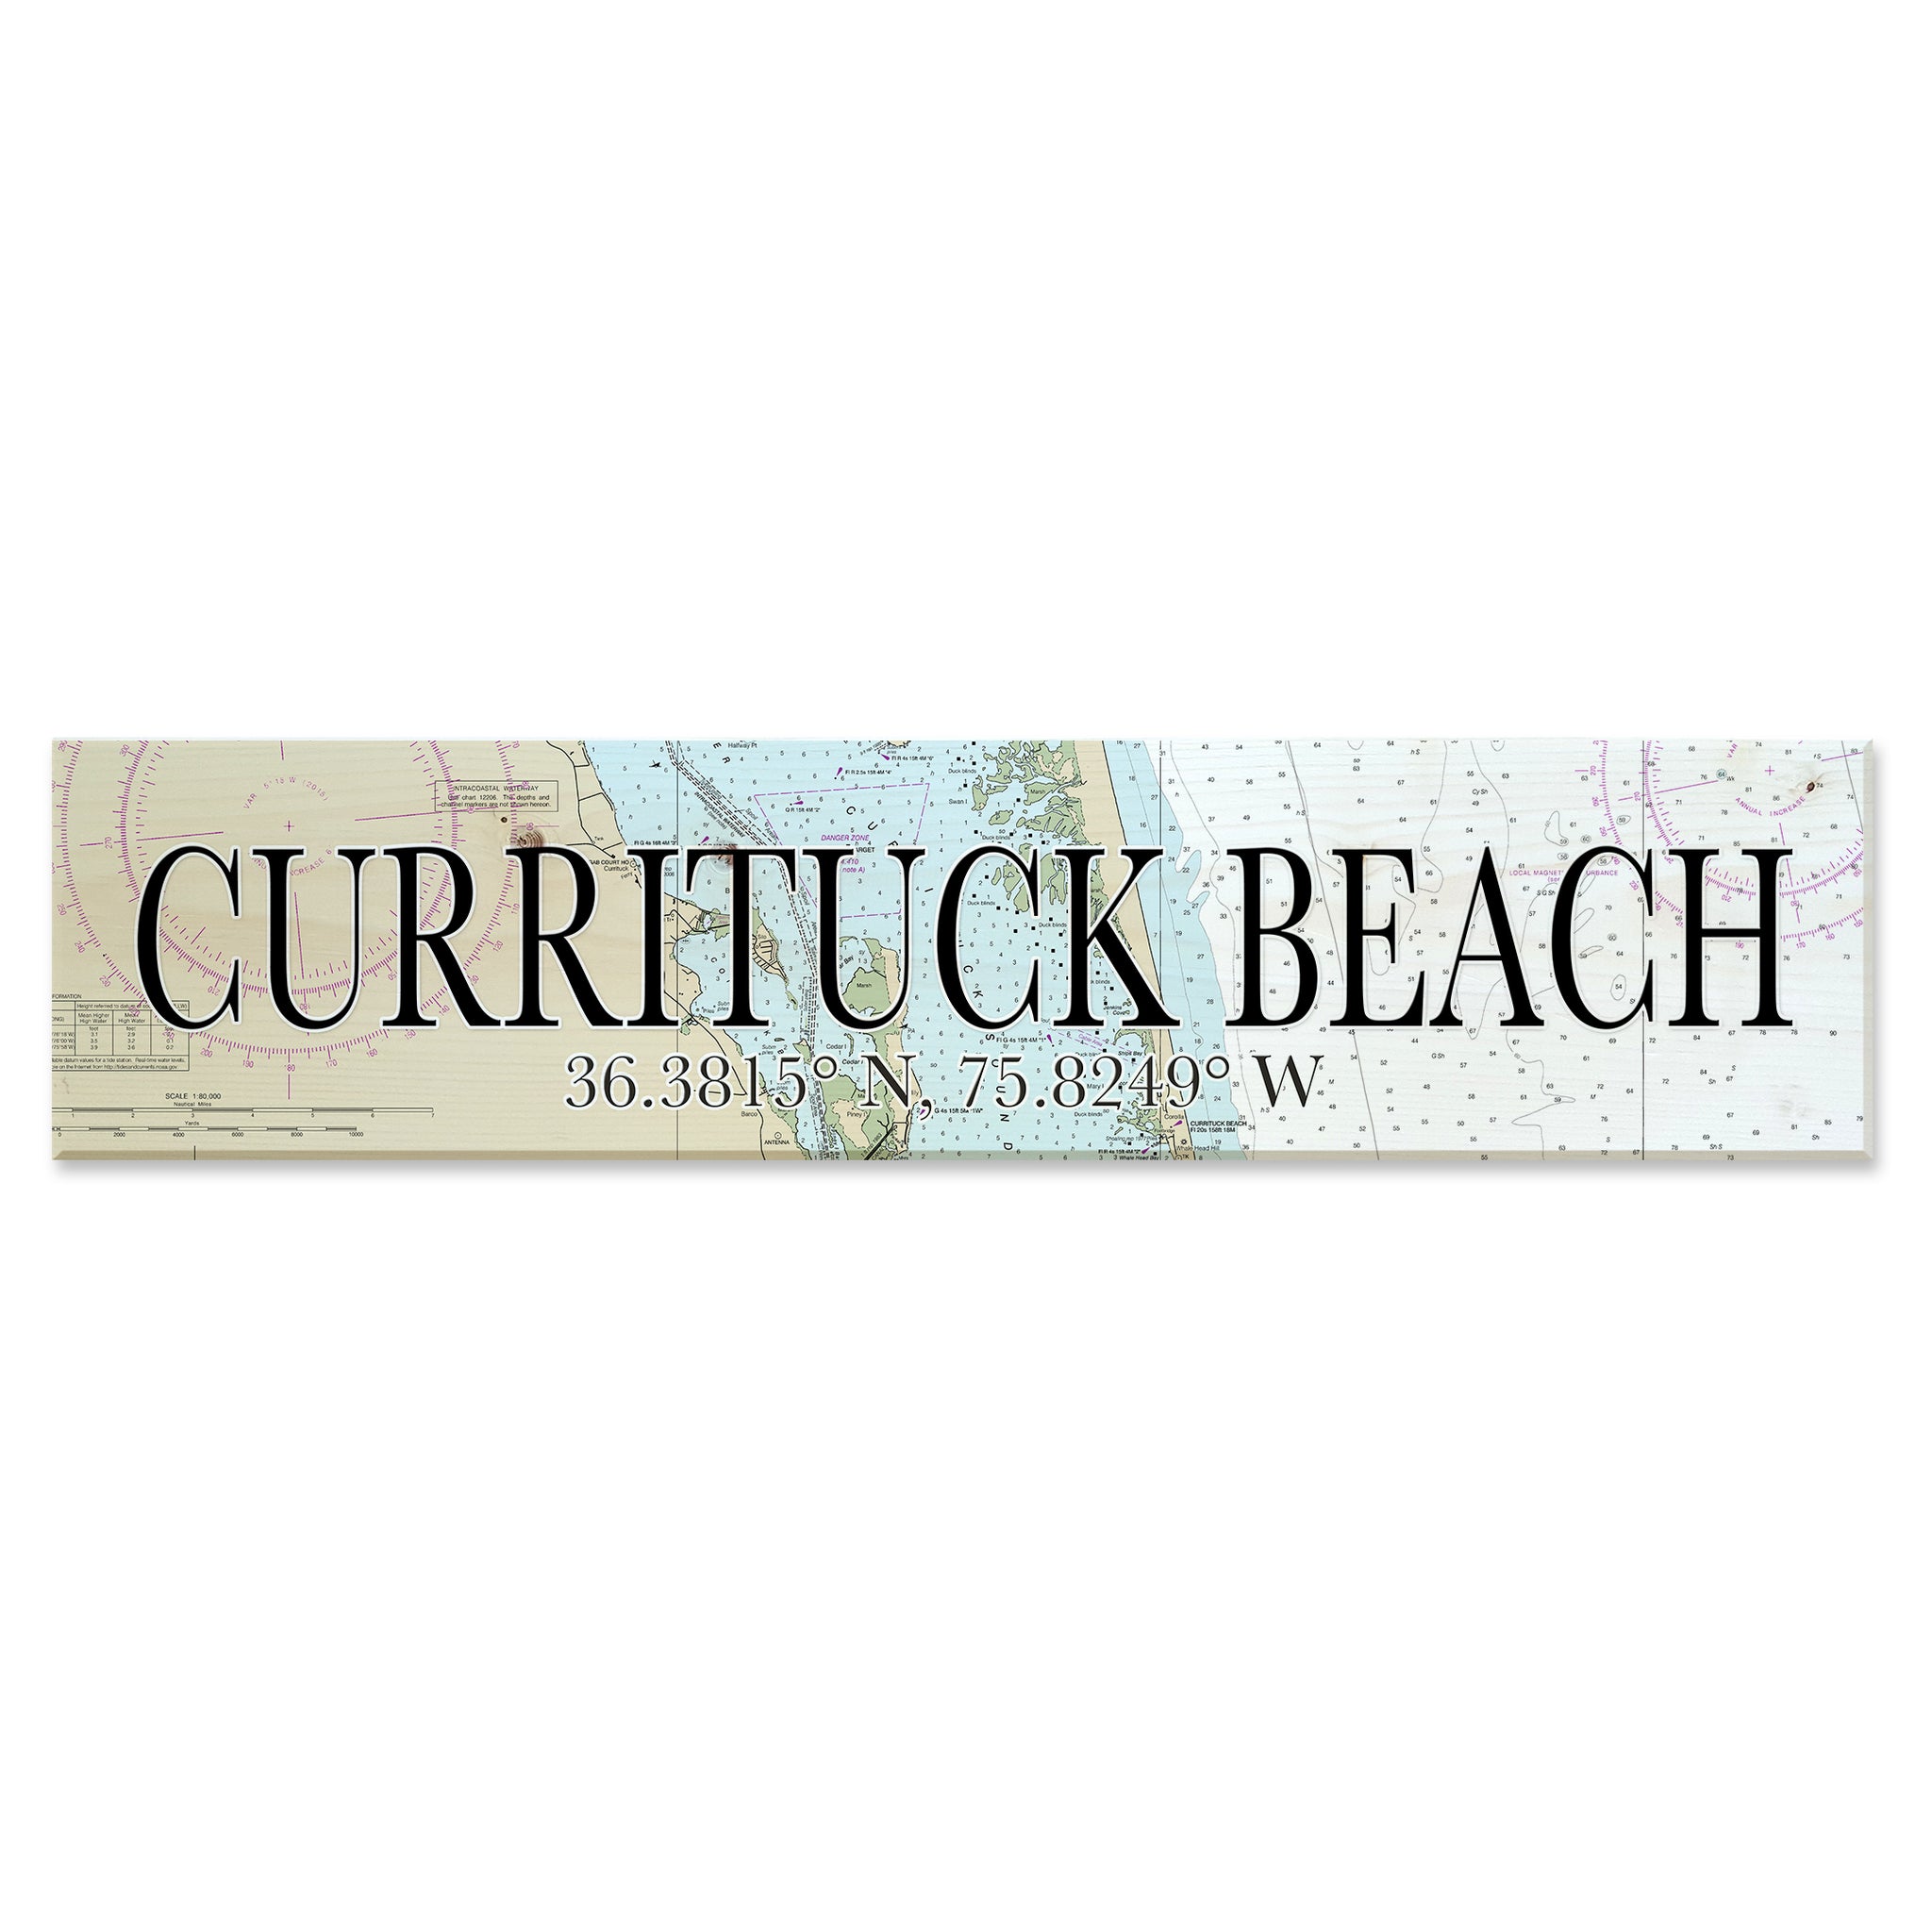 Currituck Beach, NC Coordinate Sign